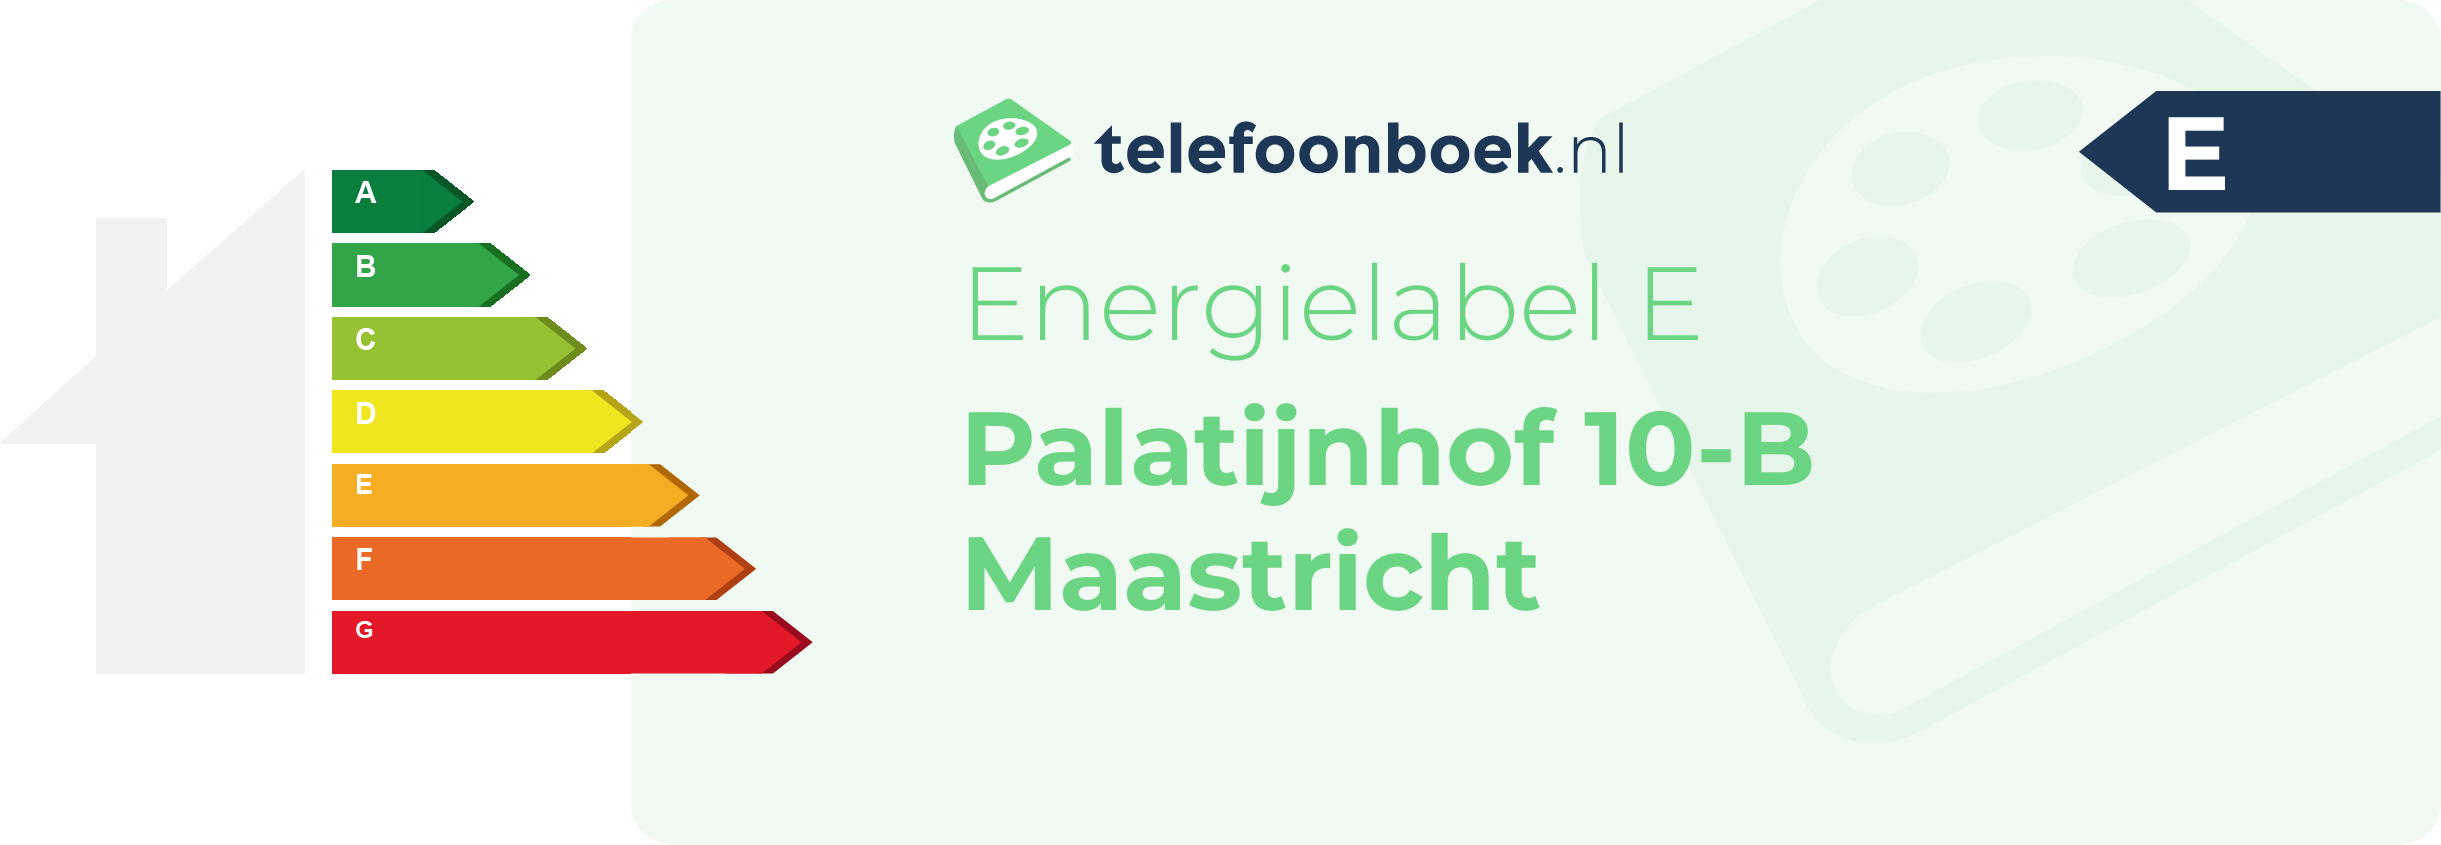 Energielabel Palatijnhof 10-B Maastricht